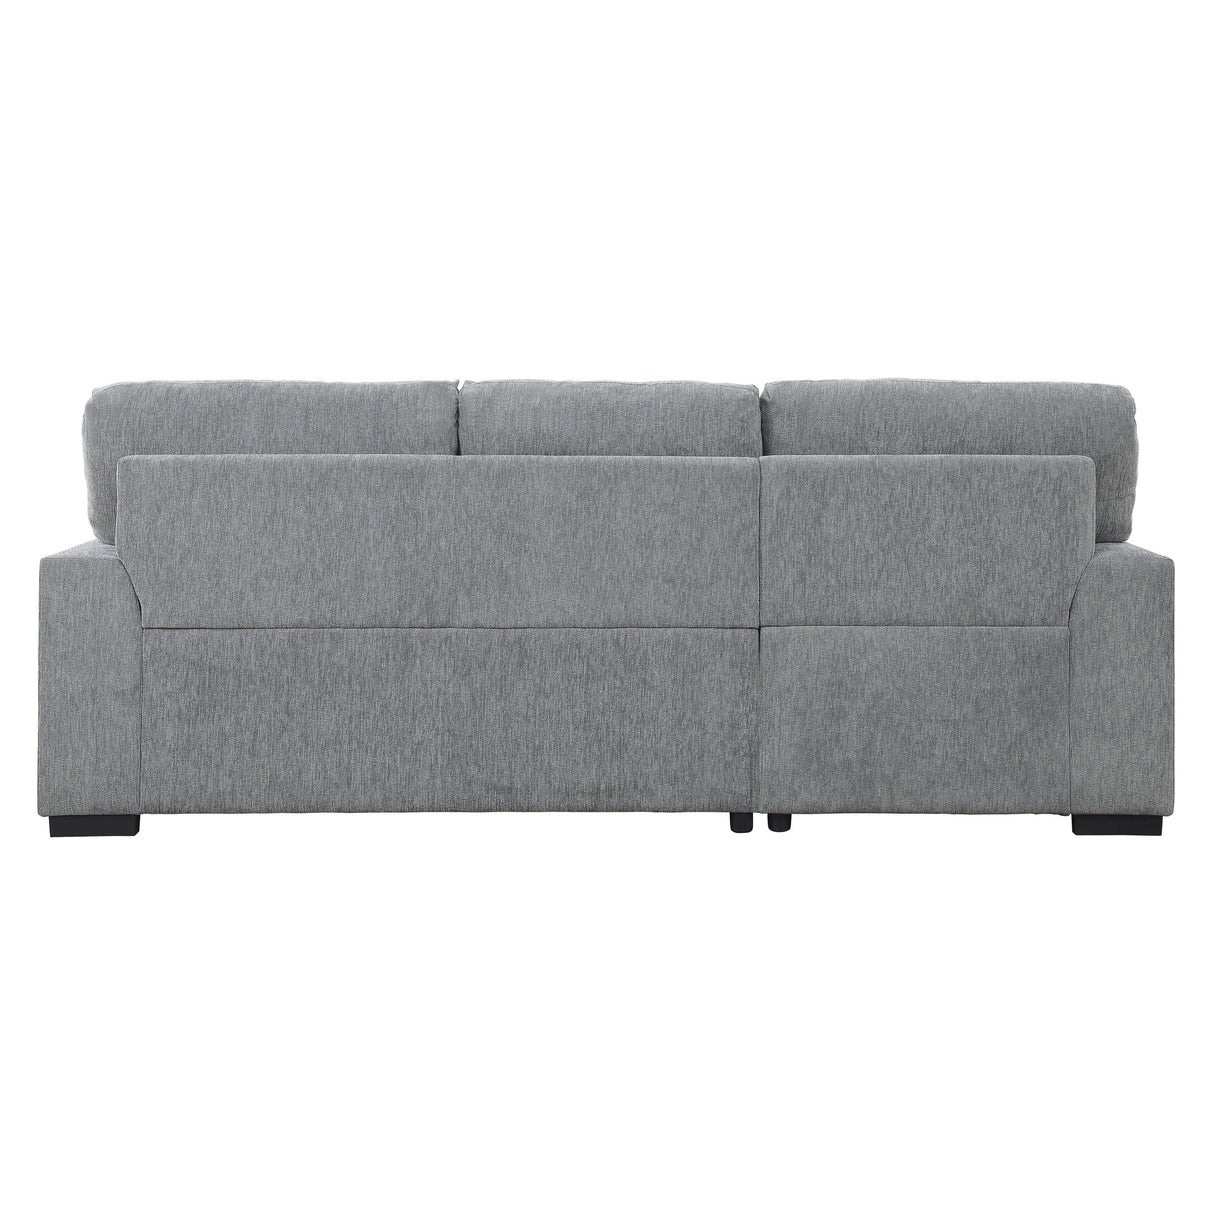 Morelia Gray LAF Storage Sleeper Sofa Chaise